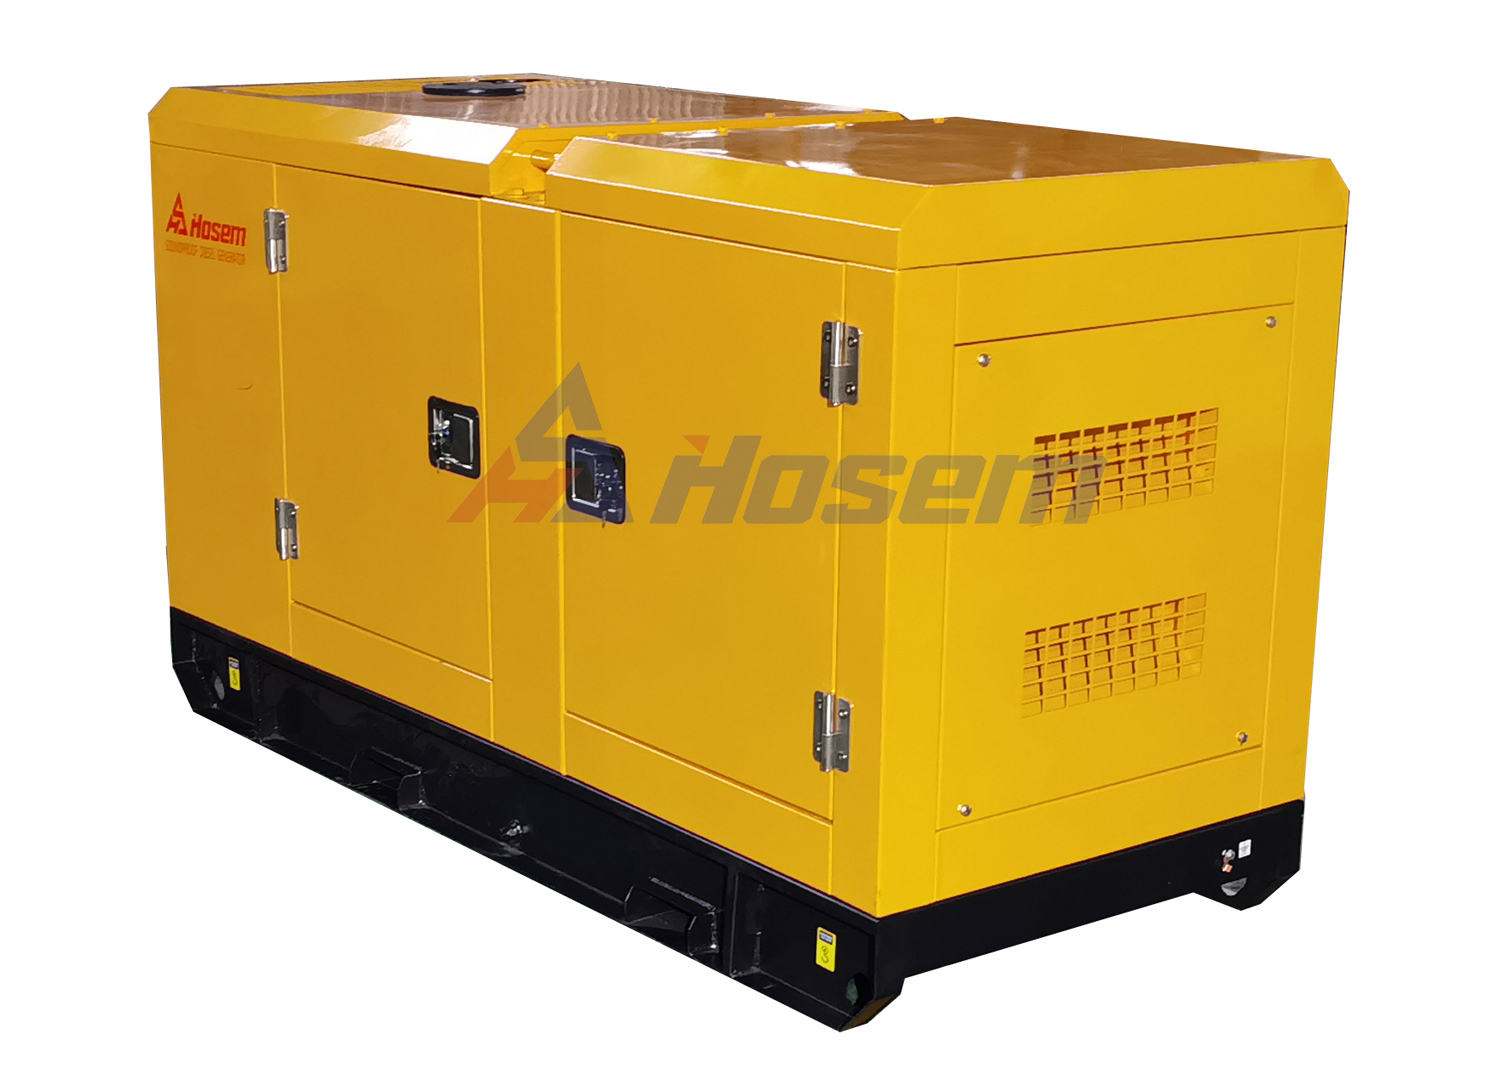 Brand New Diesel Generator For Sale , 15kVA Fawde Diesel Generator with Brushless Alternator